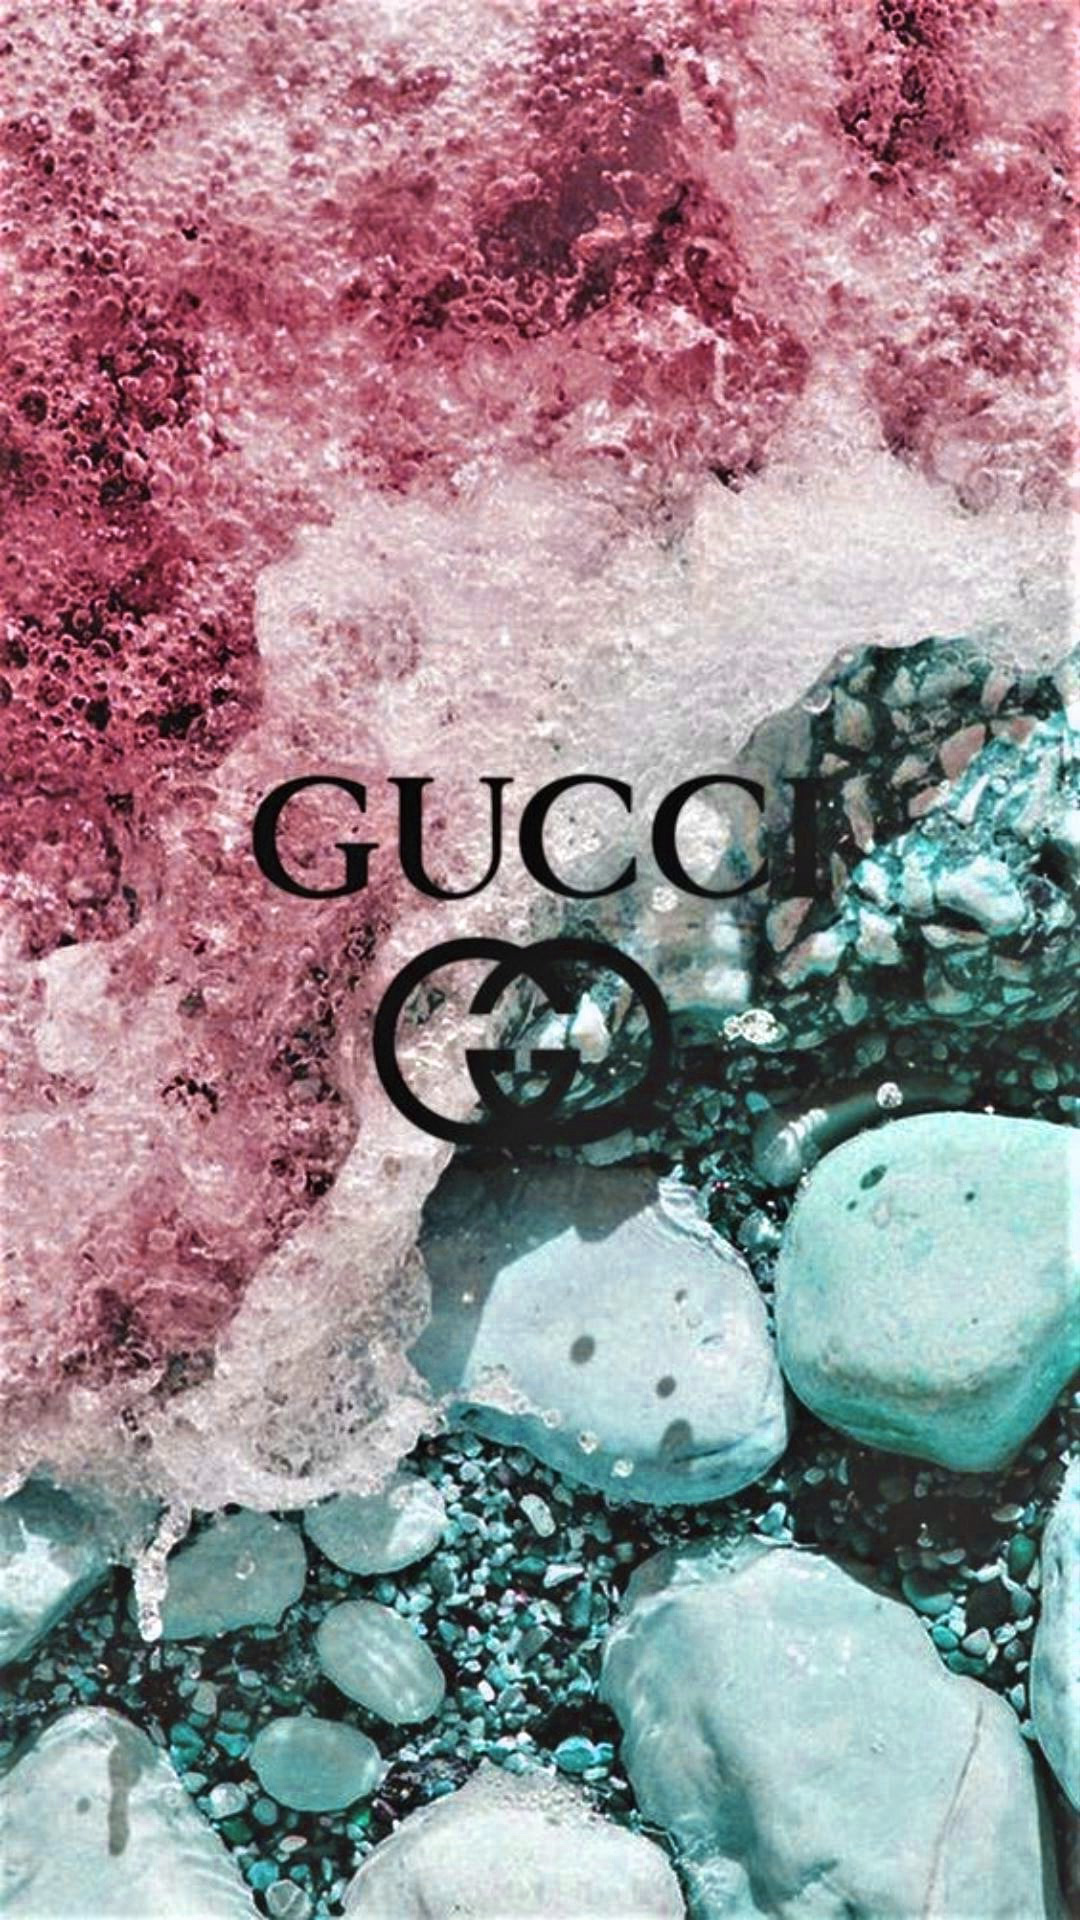 Download Gucci And Supreme Wallpaper Wallpaper